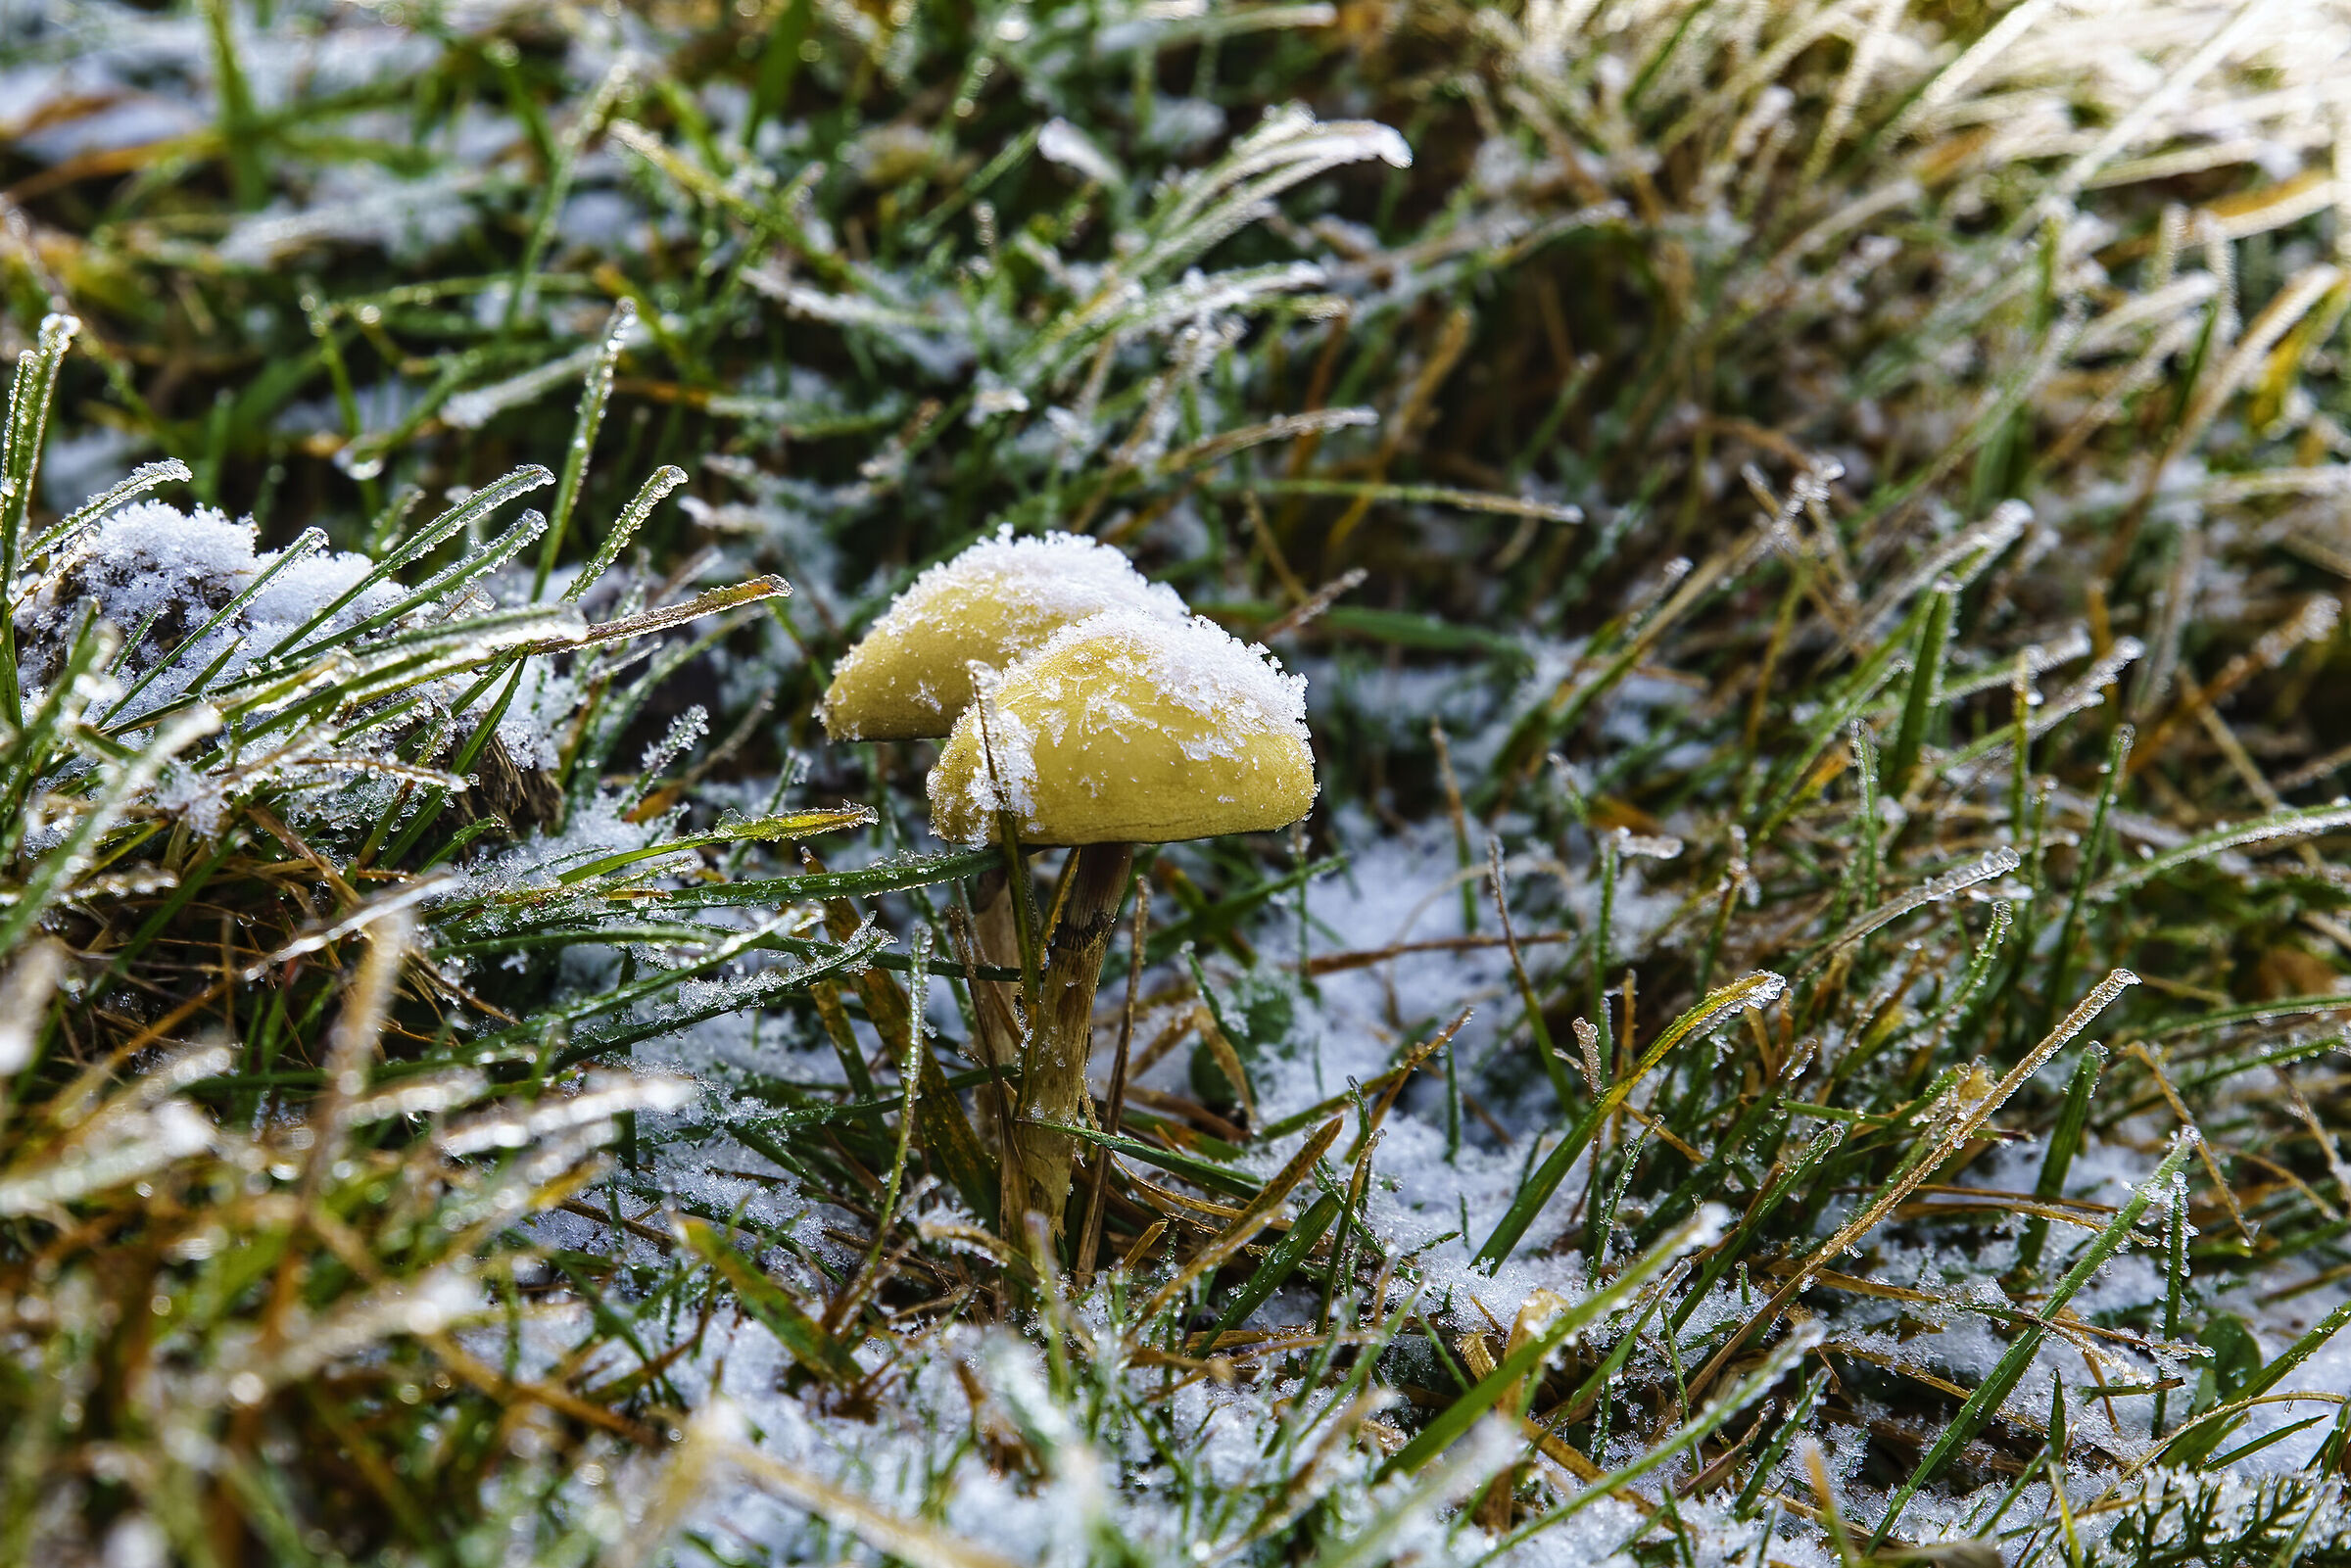 Late mushrooms (frozen)...